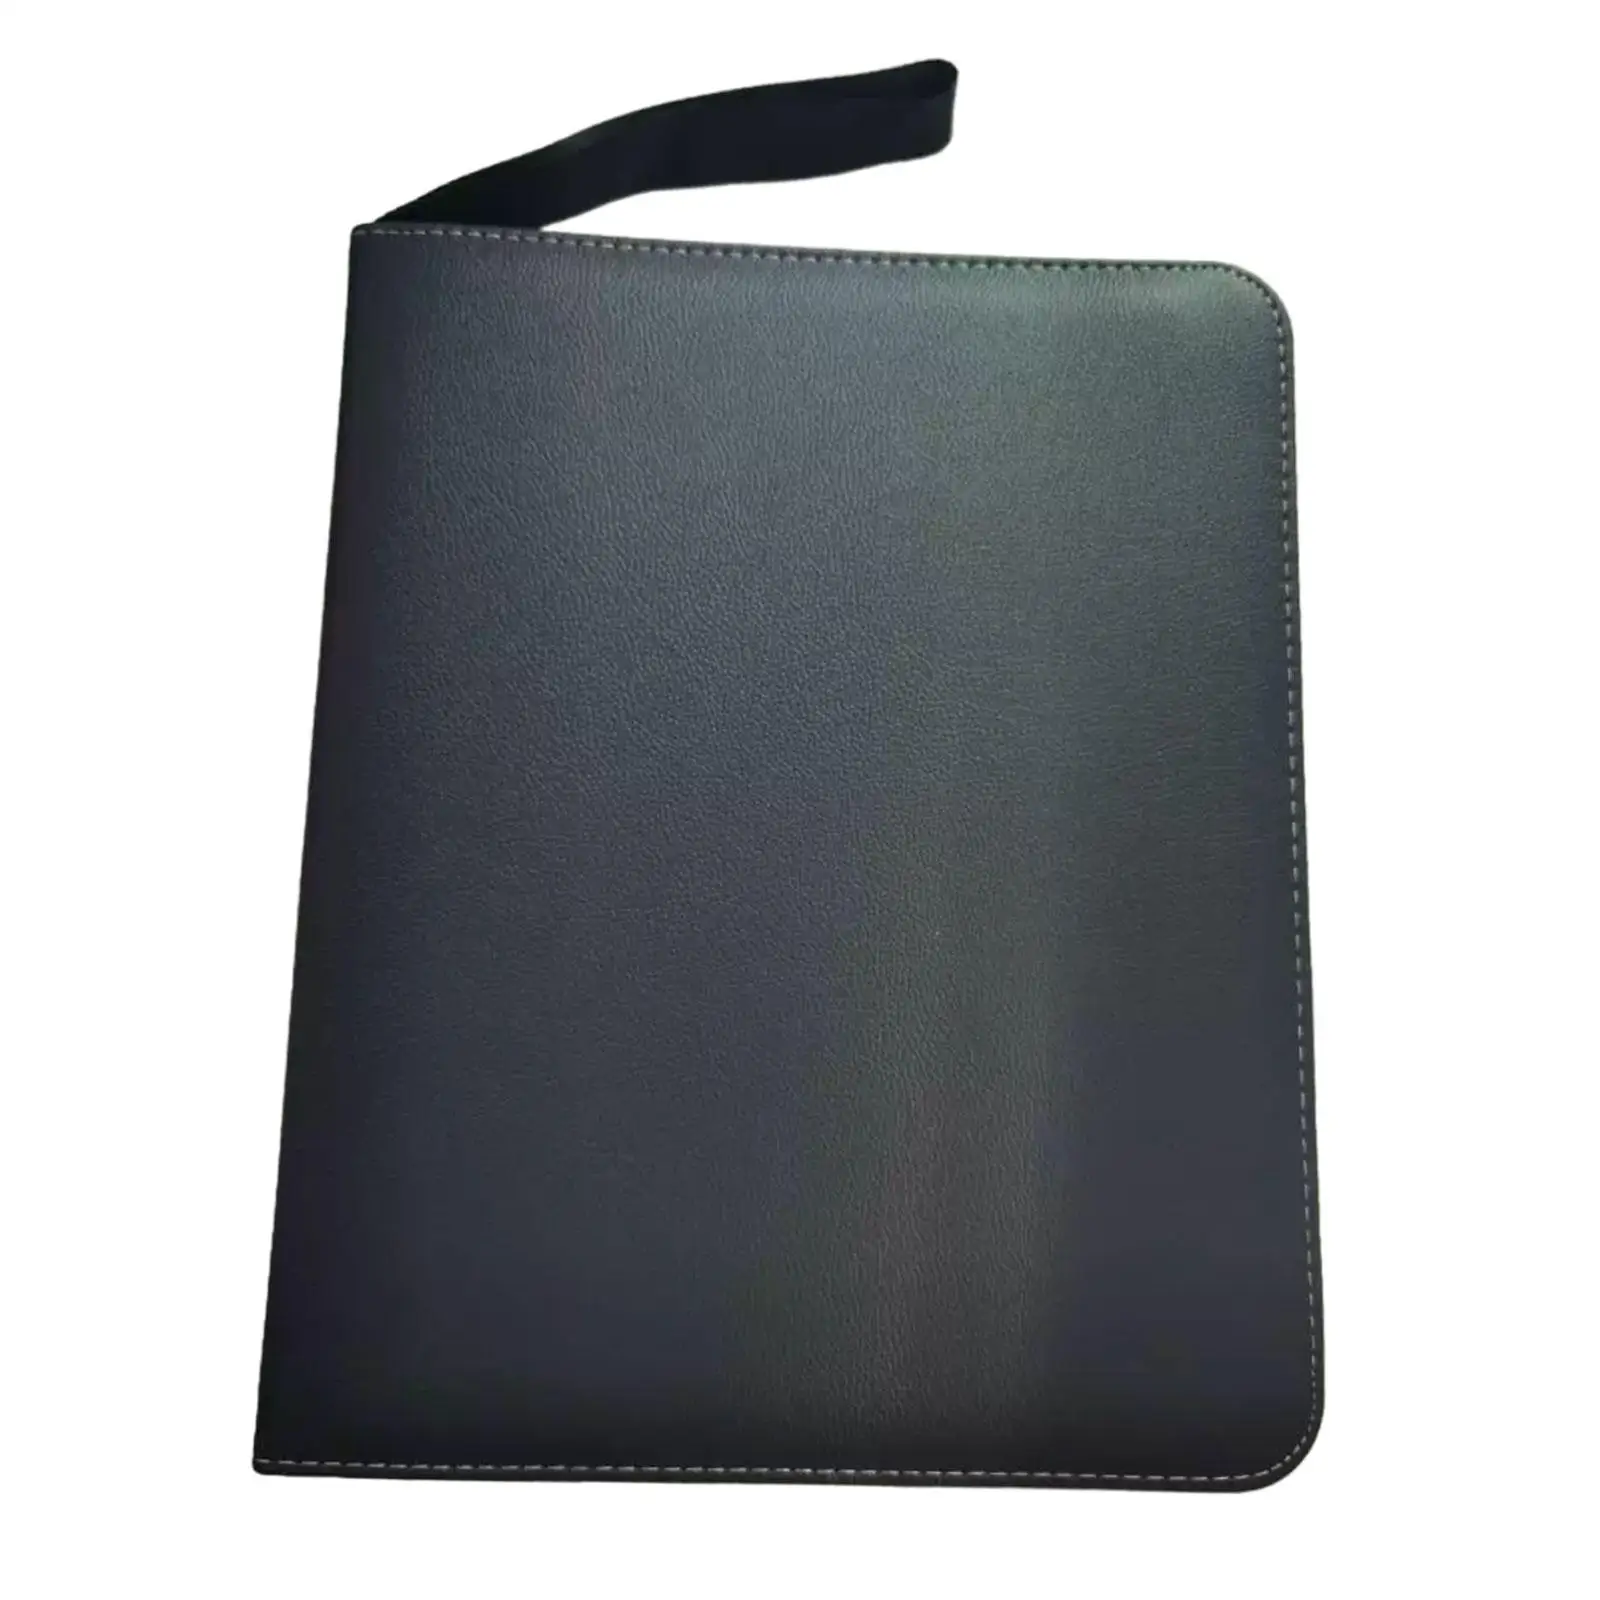 Trading Card Carrying Binder Card Holder Folders for Game Cards Sports Cards Single Pocket 9.8cmx7.2cm Card Storage Case Black